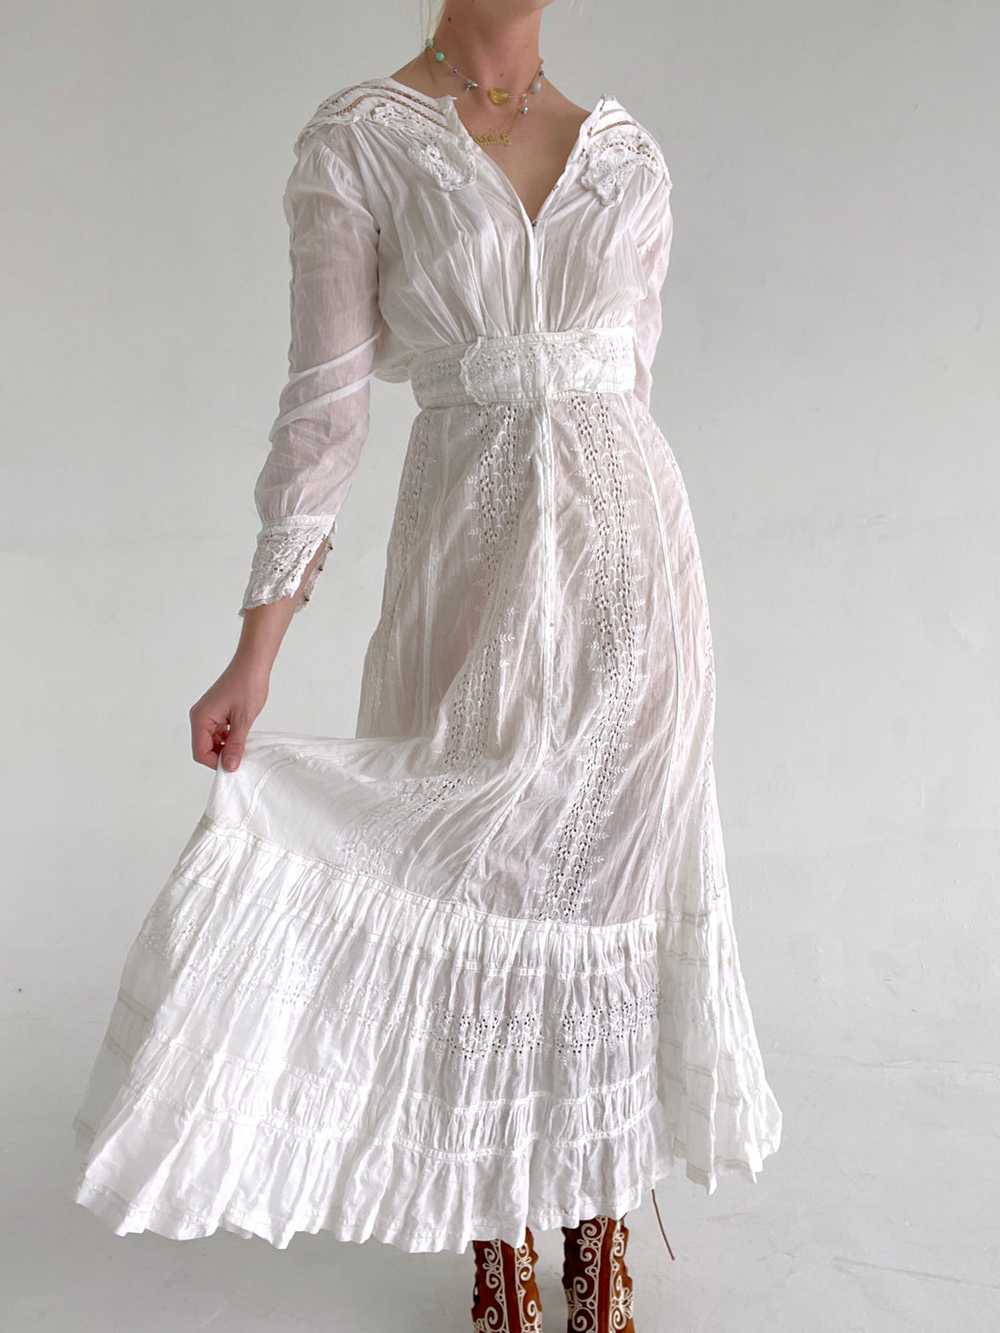 Victorian White Cotton Lawn Dress - image 12